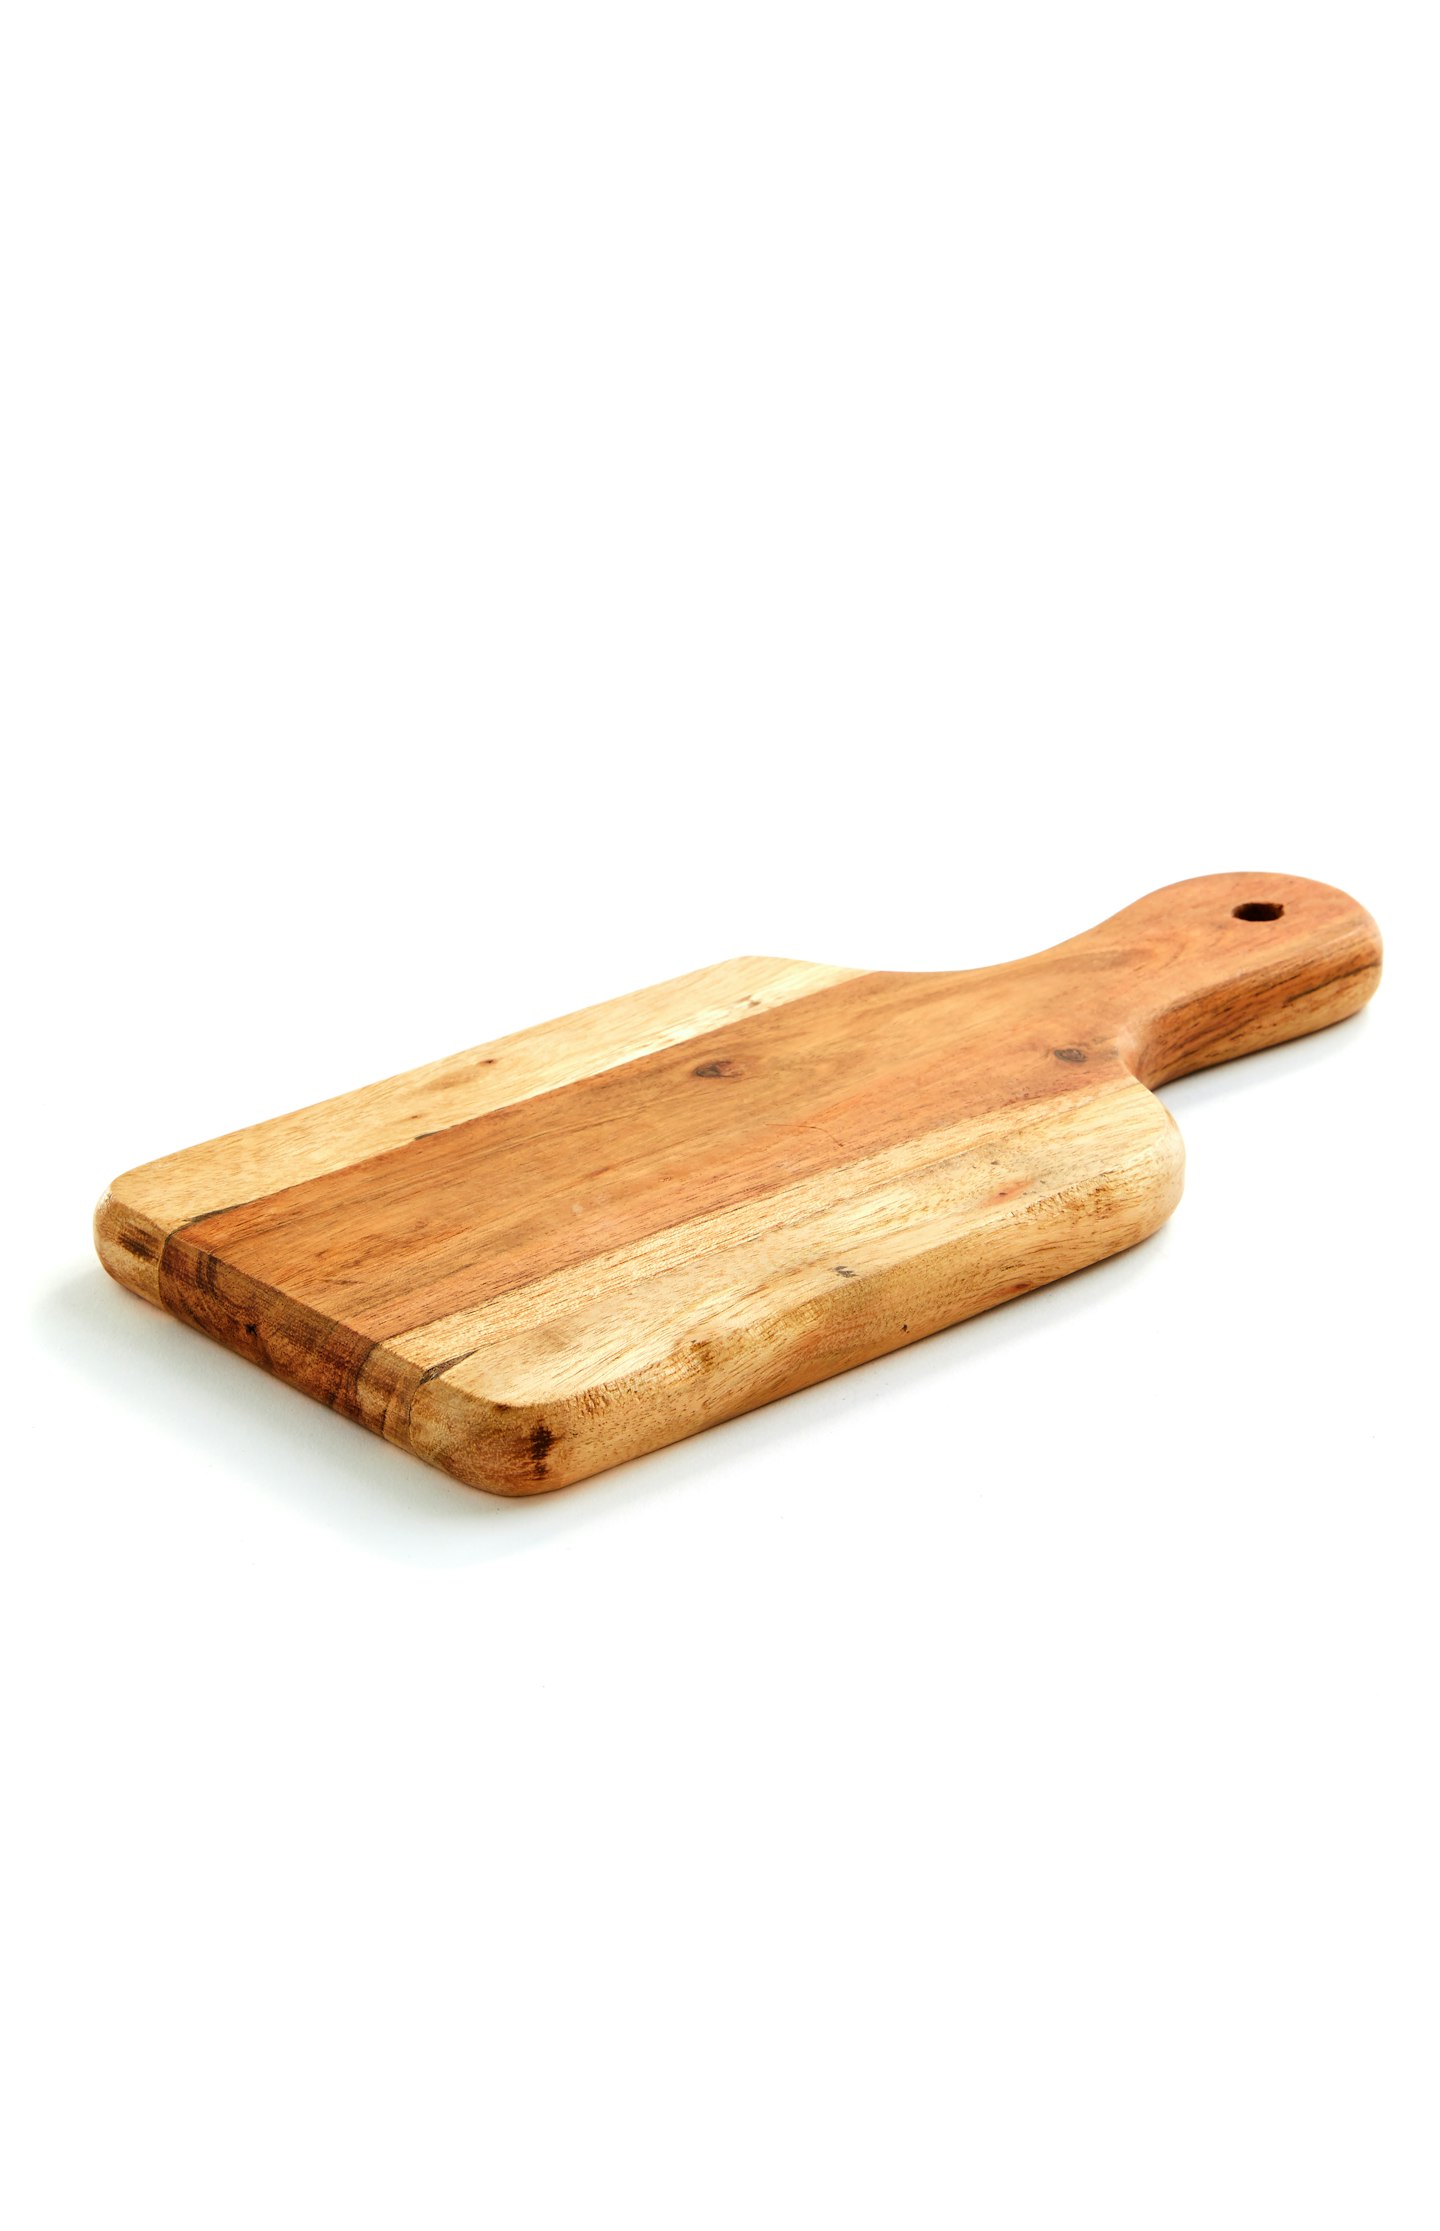 Primark, Small Wood Chopping Board, £4.50